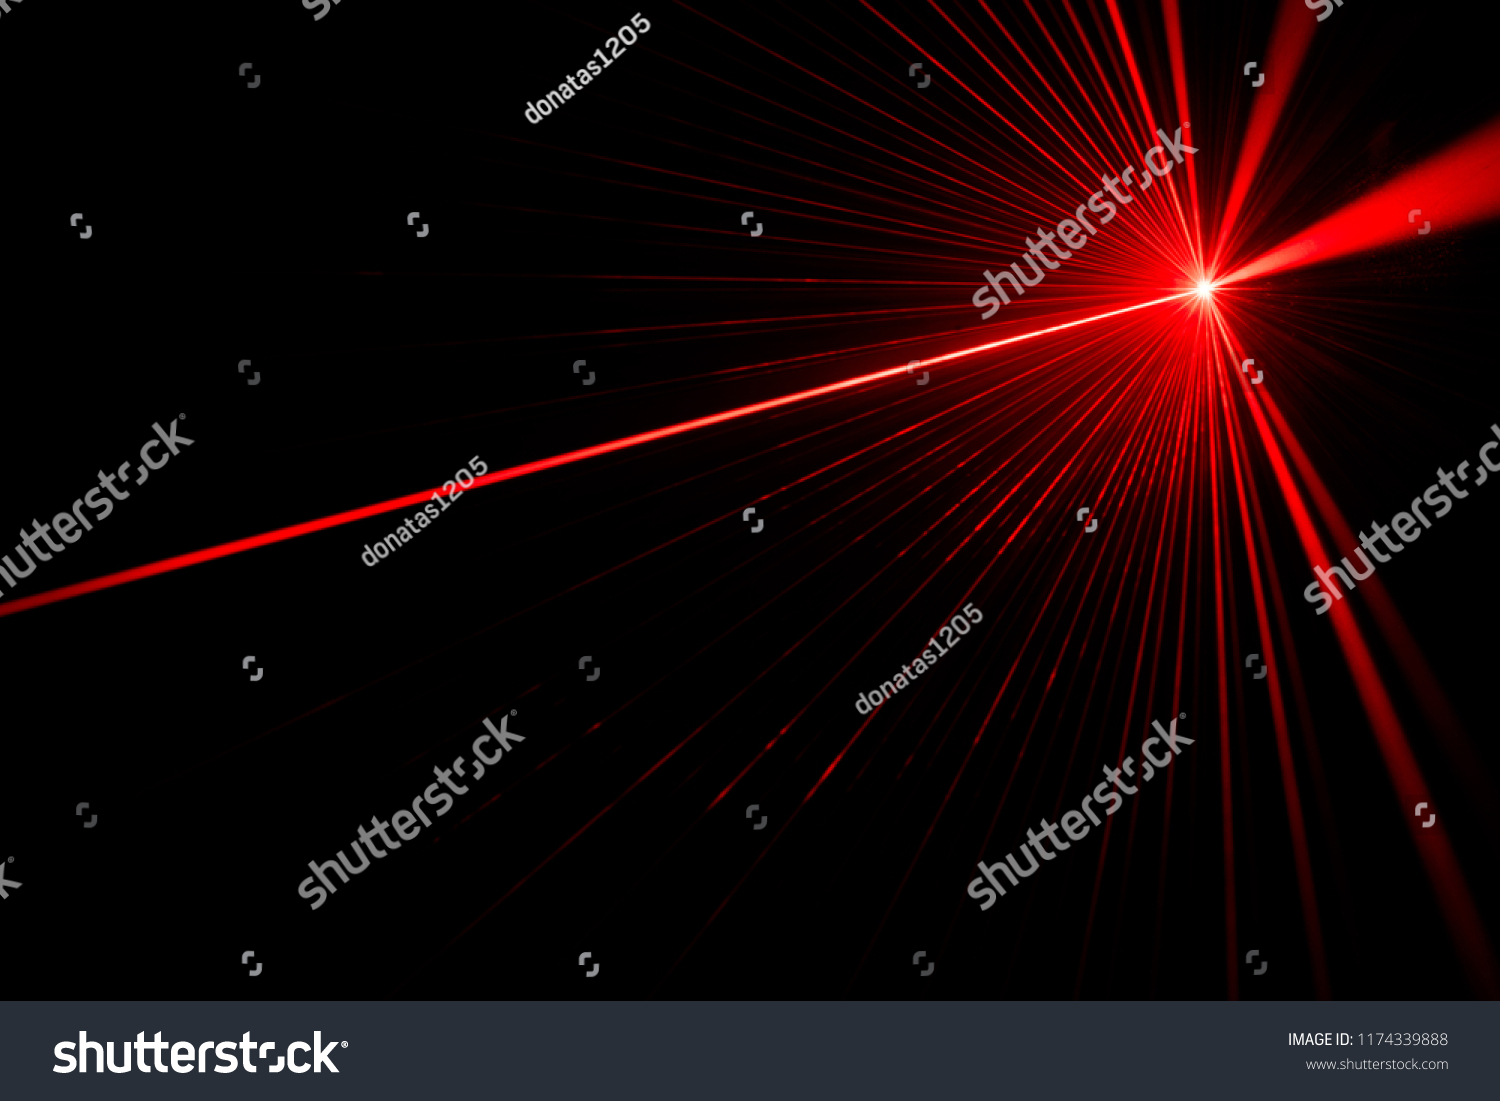 Red laser beam light effect on black background #1174339888